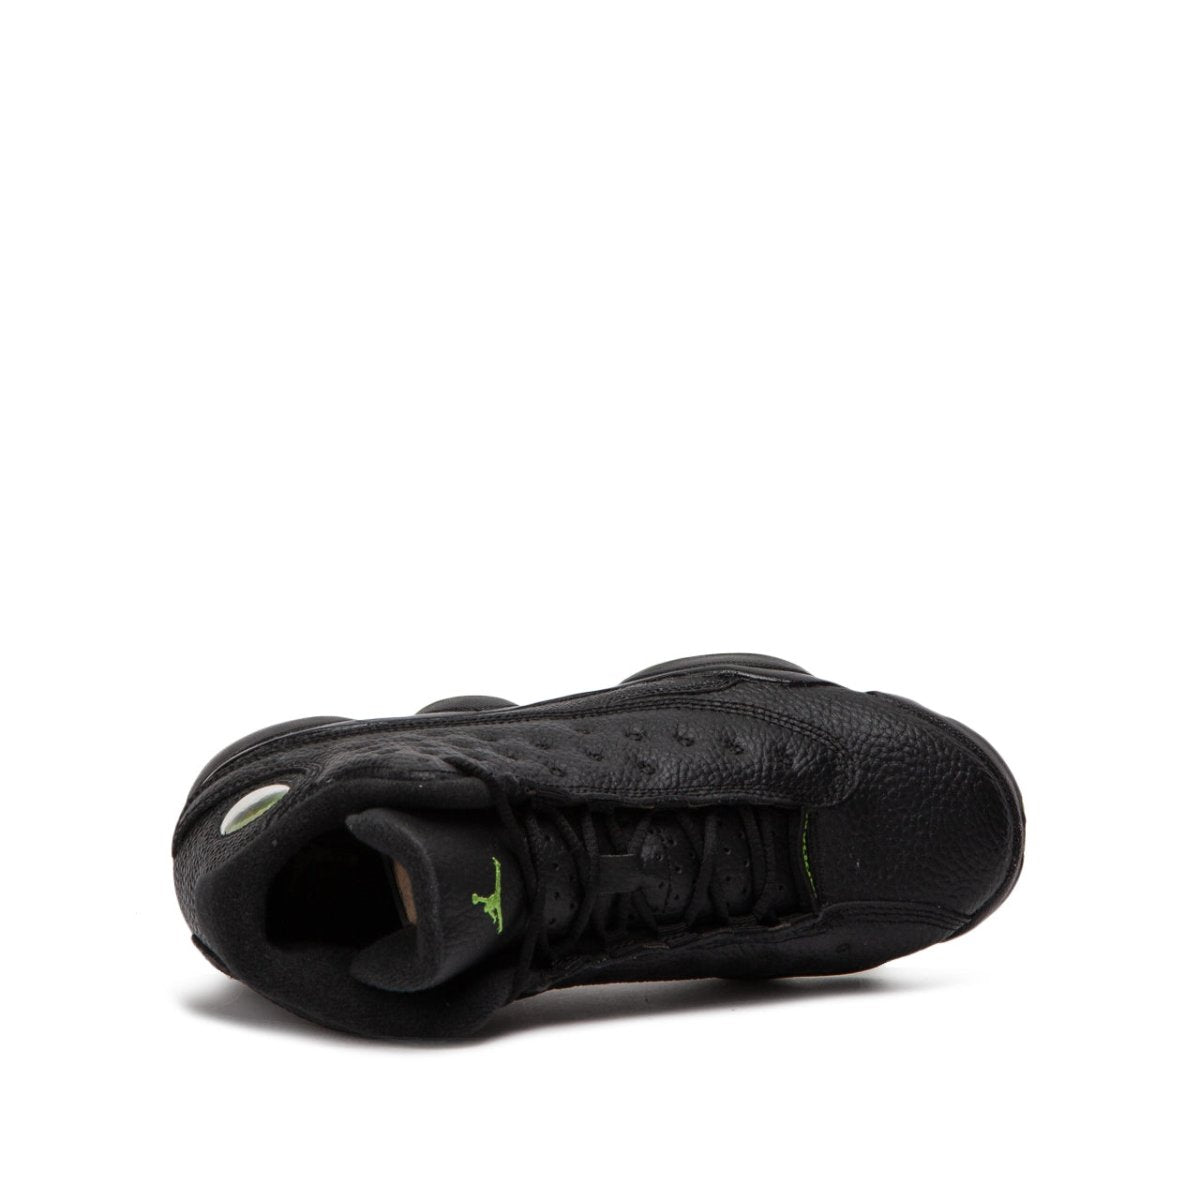 Nike Air Jordan XIII Retro BG (Schwarz / Grün)  - Allike Store